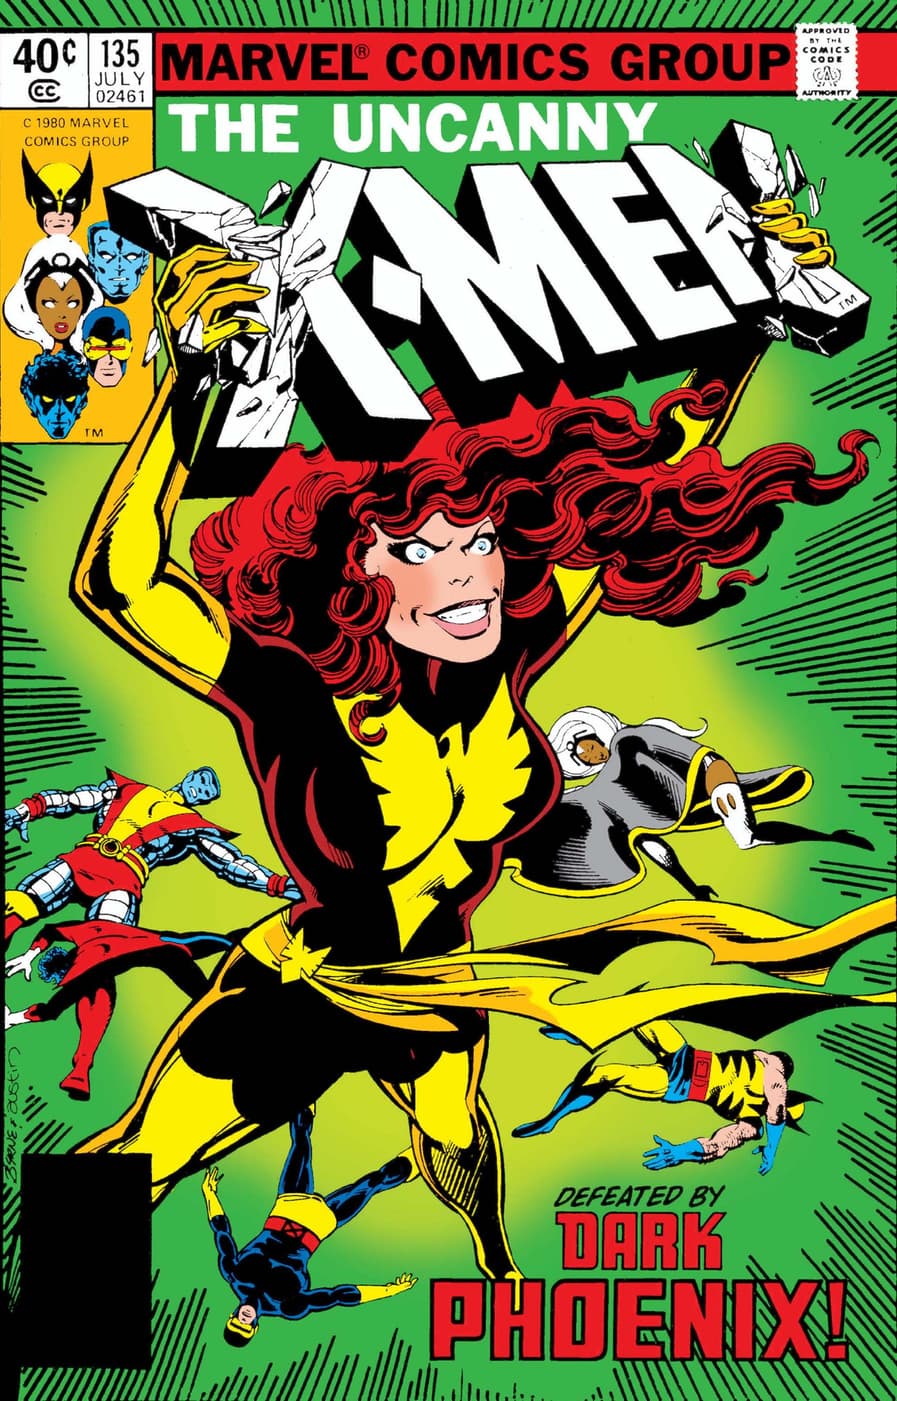 Uncanny X-Men #135